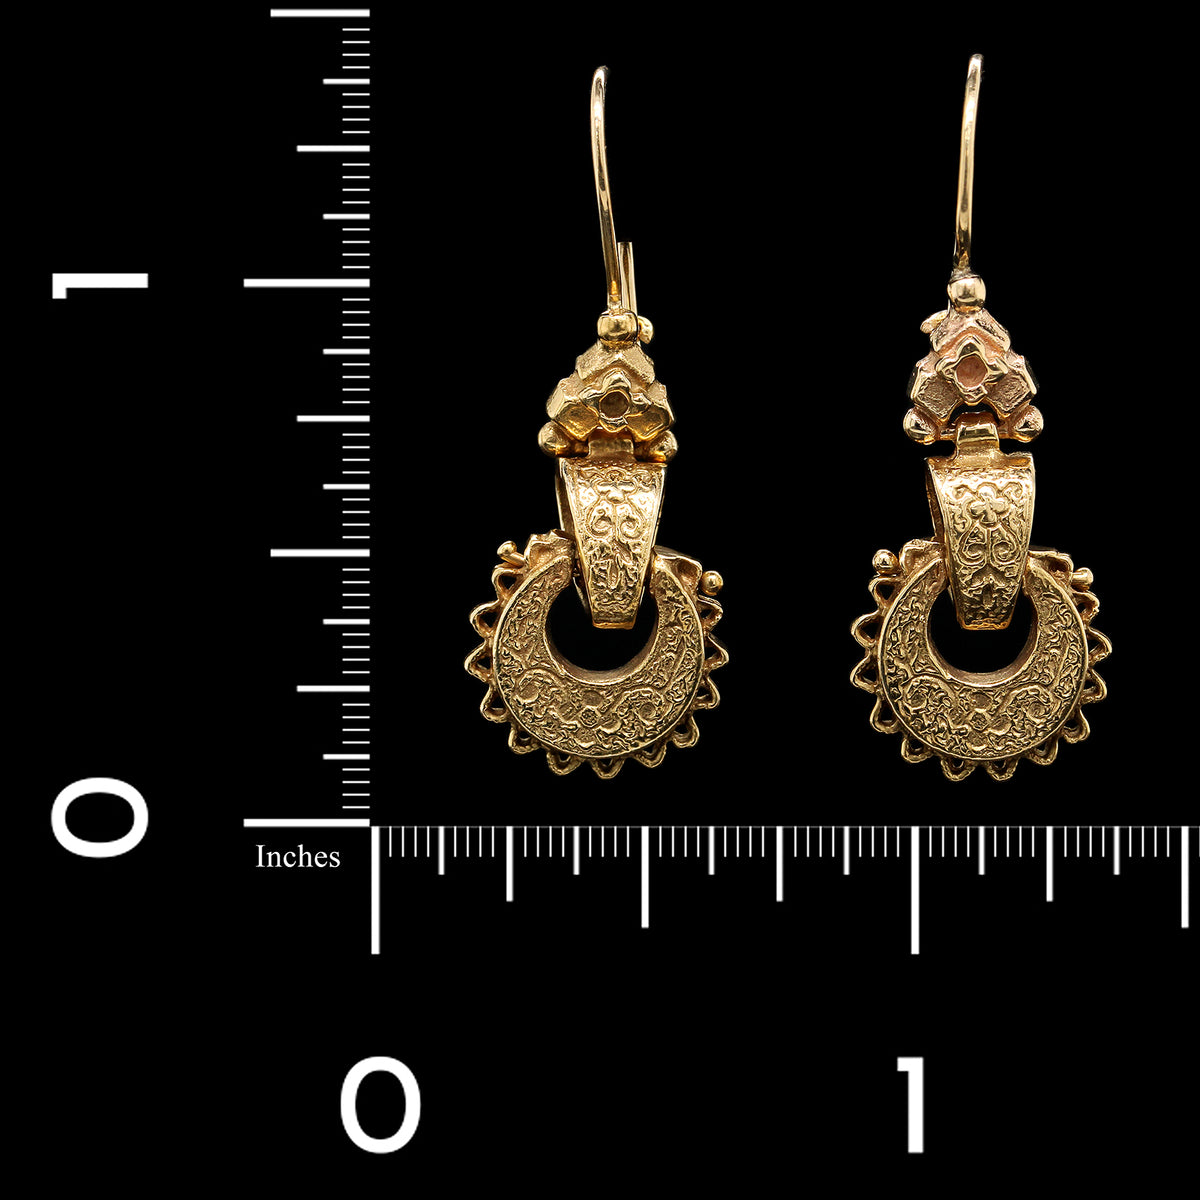 14K Yellow Gold Estate Vintage Drop Earrings